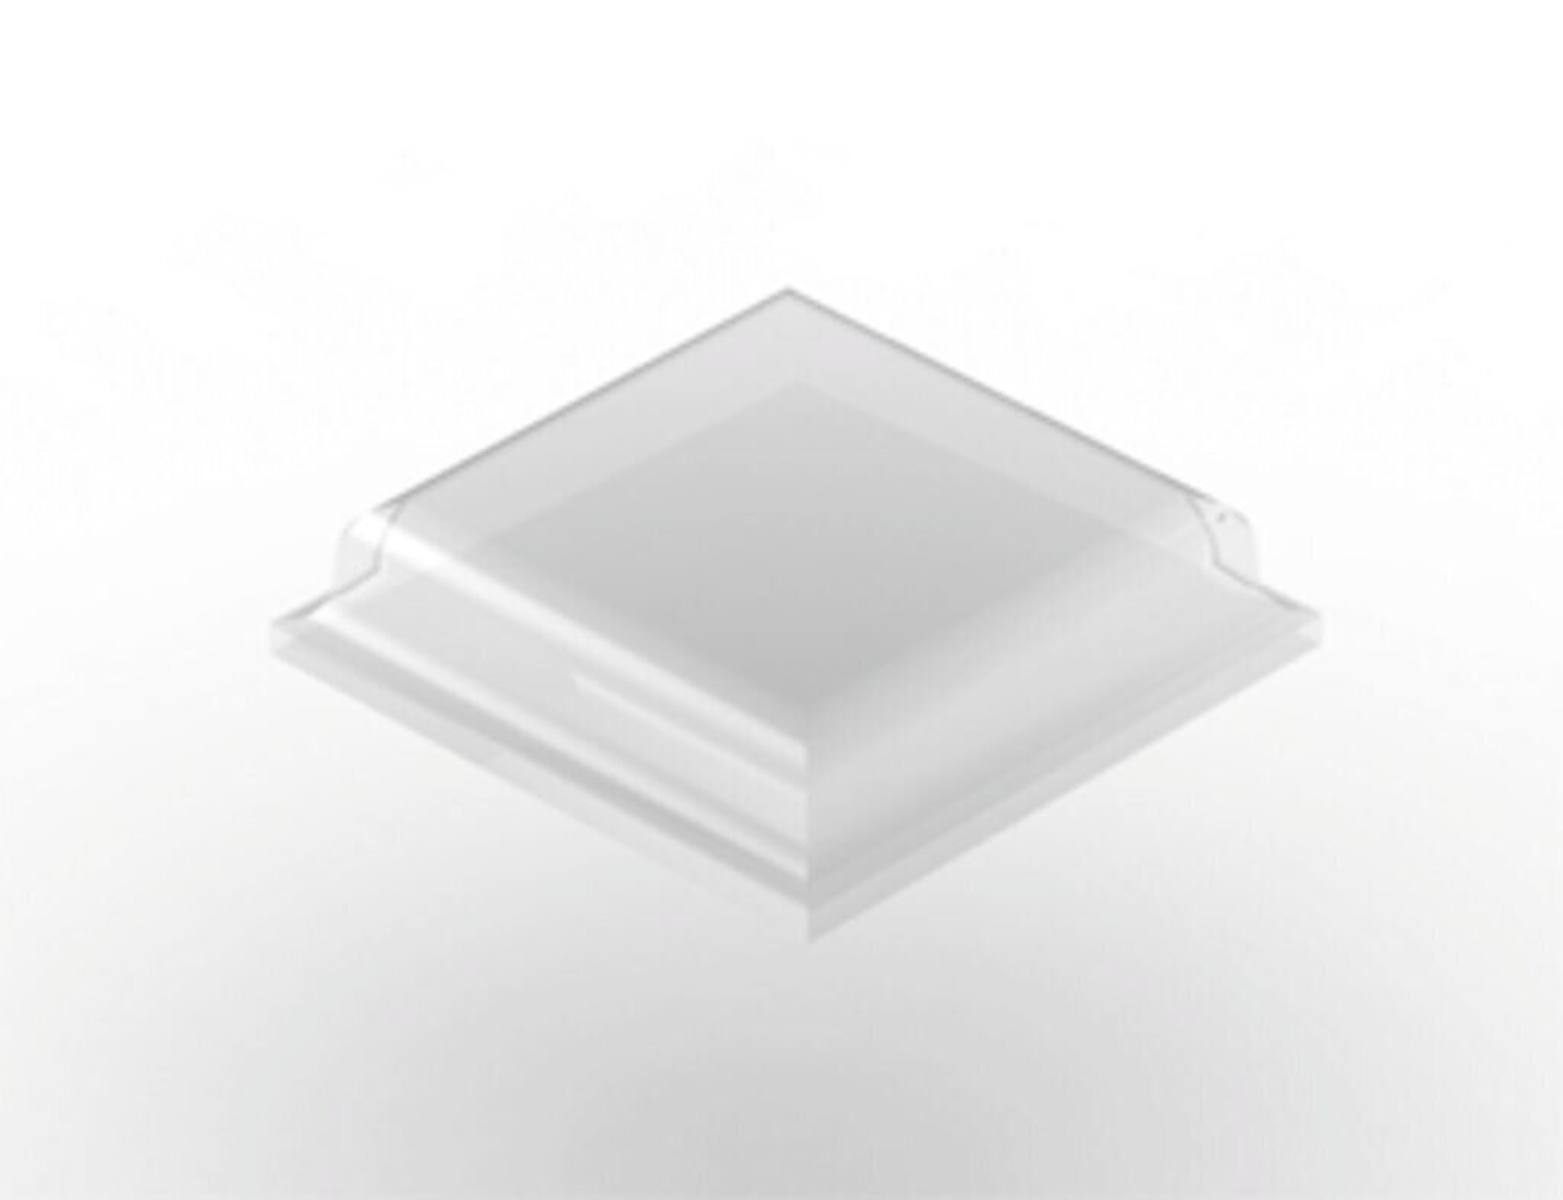 3M Bumpon SJ5307 transparent / Breite: 10,5mm Höhe: 2,5mm